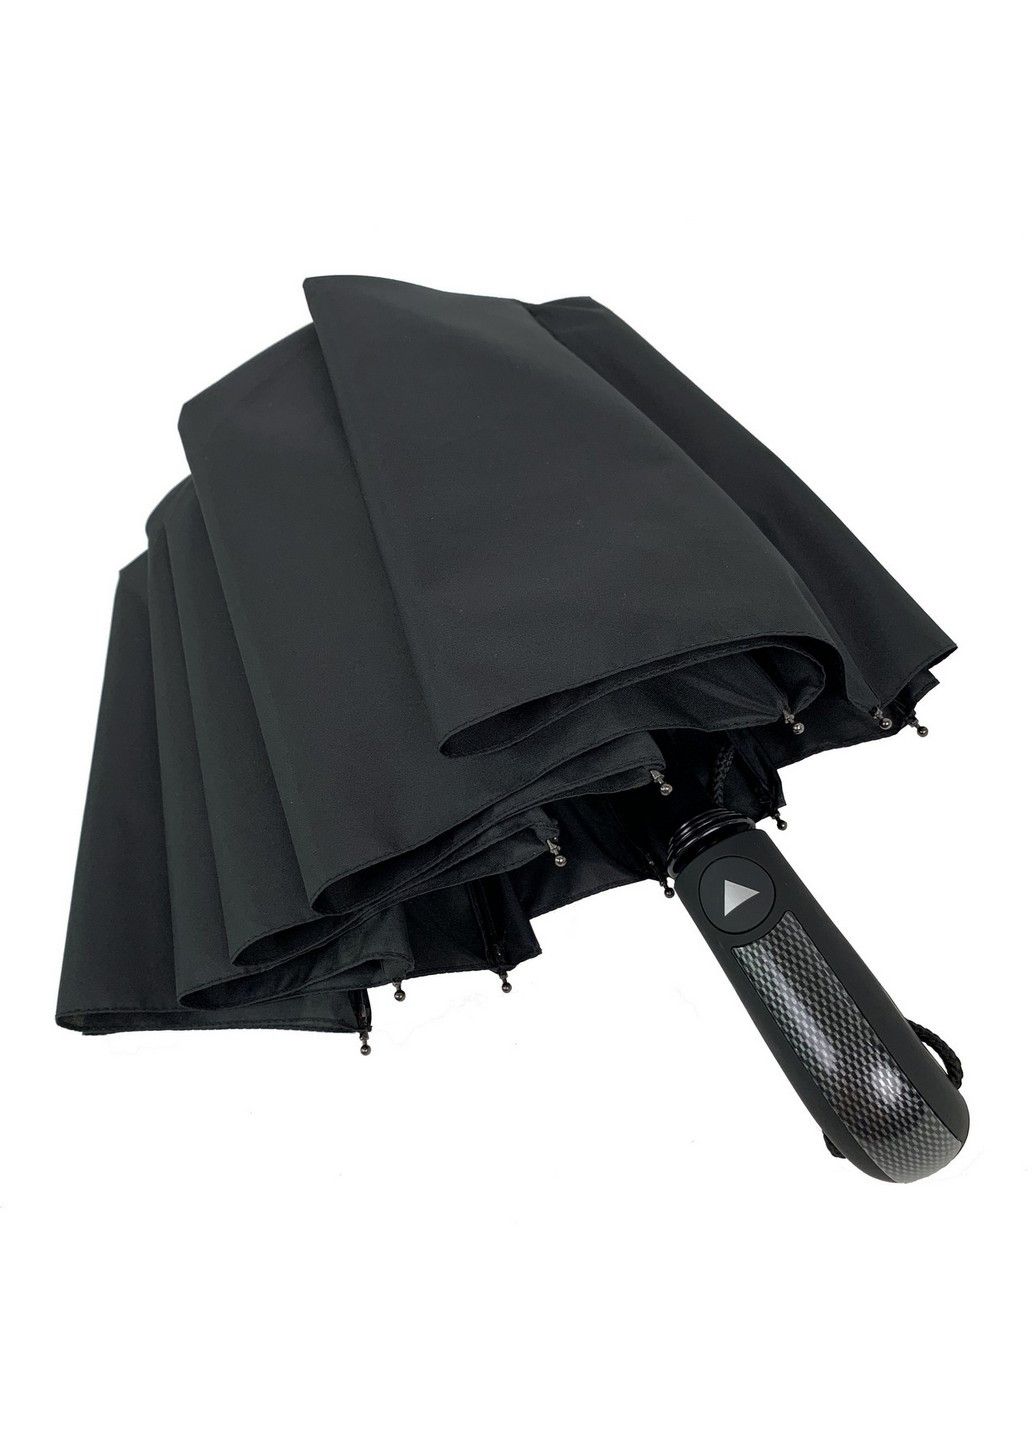 Мужской зонт-автомат 102 см Flagman (258638041)